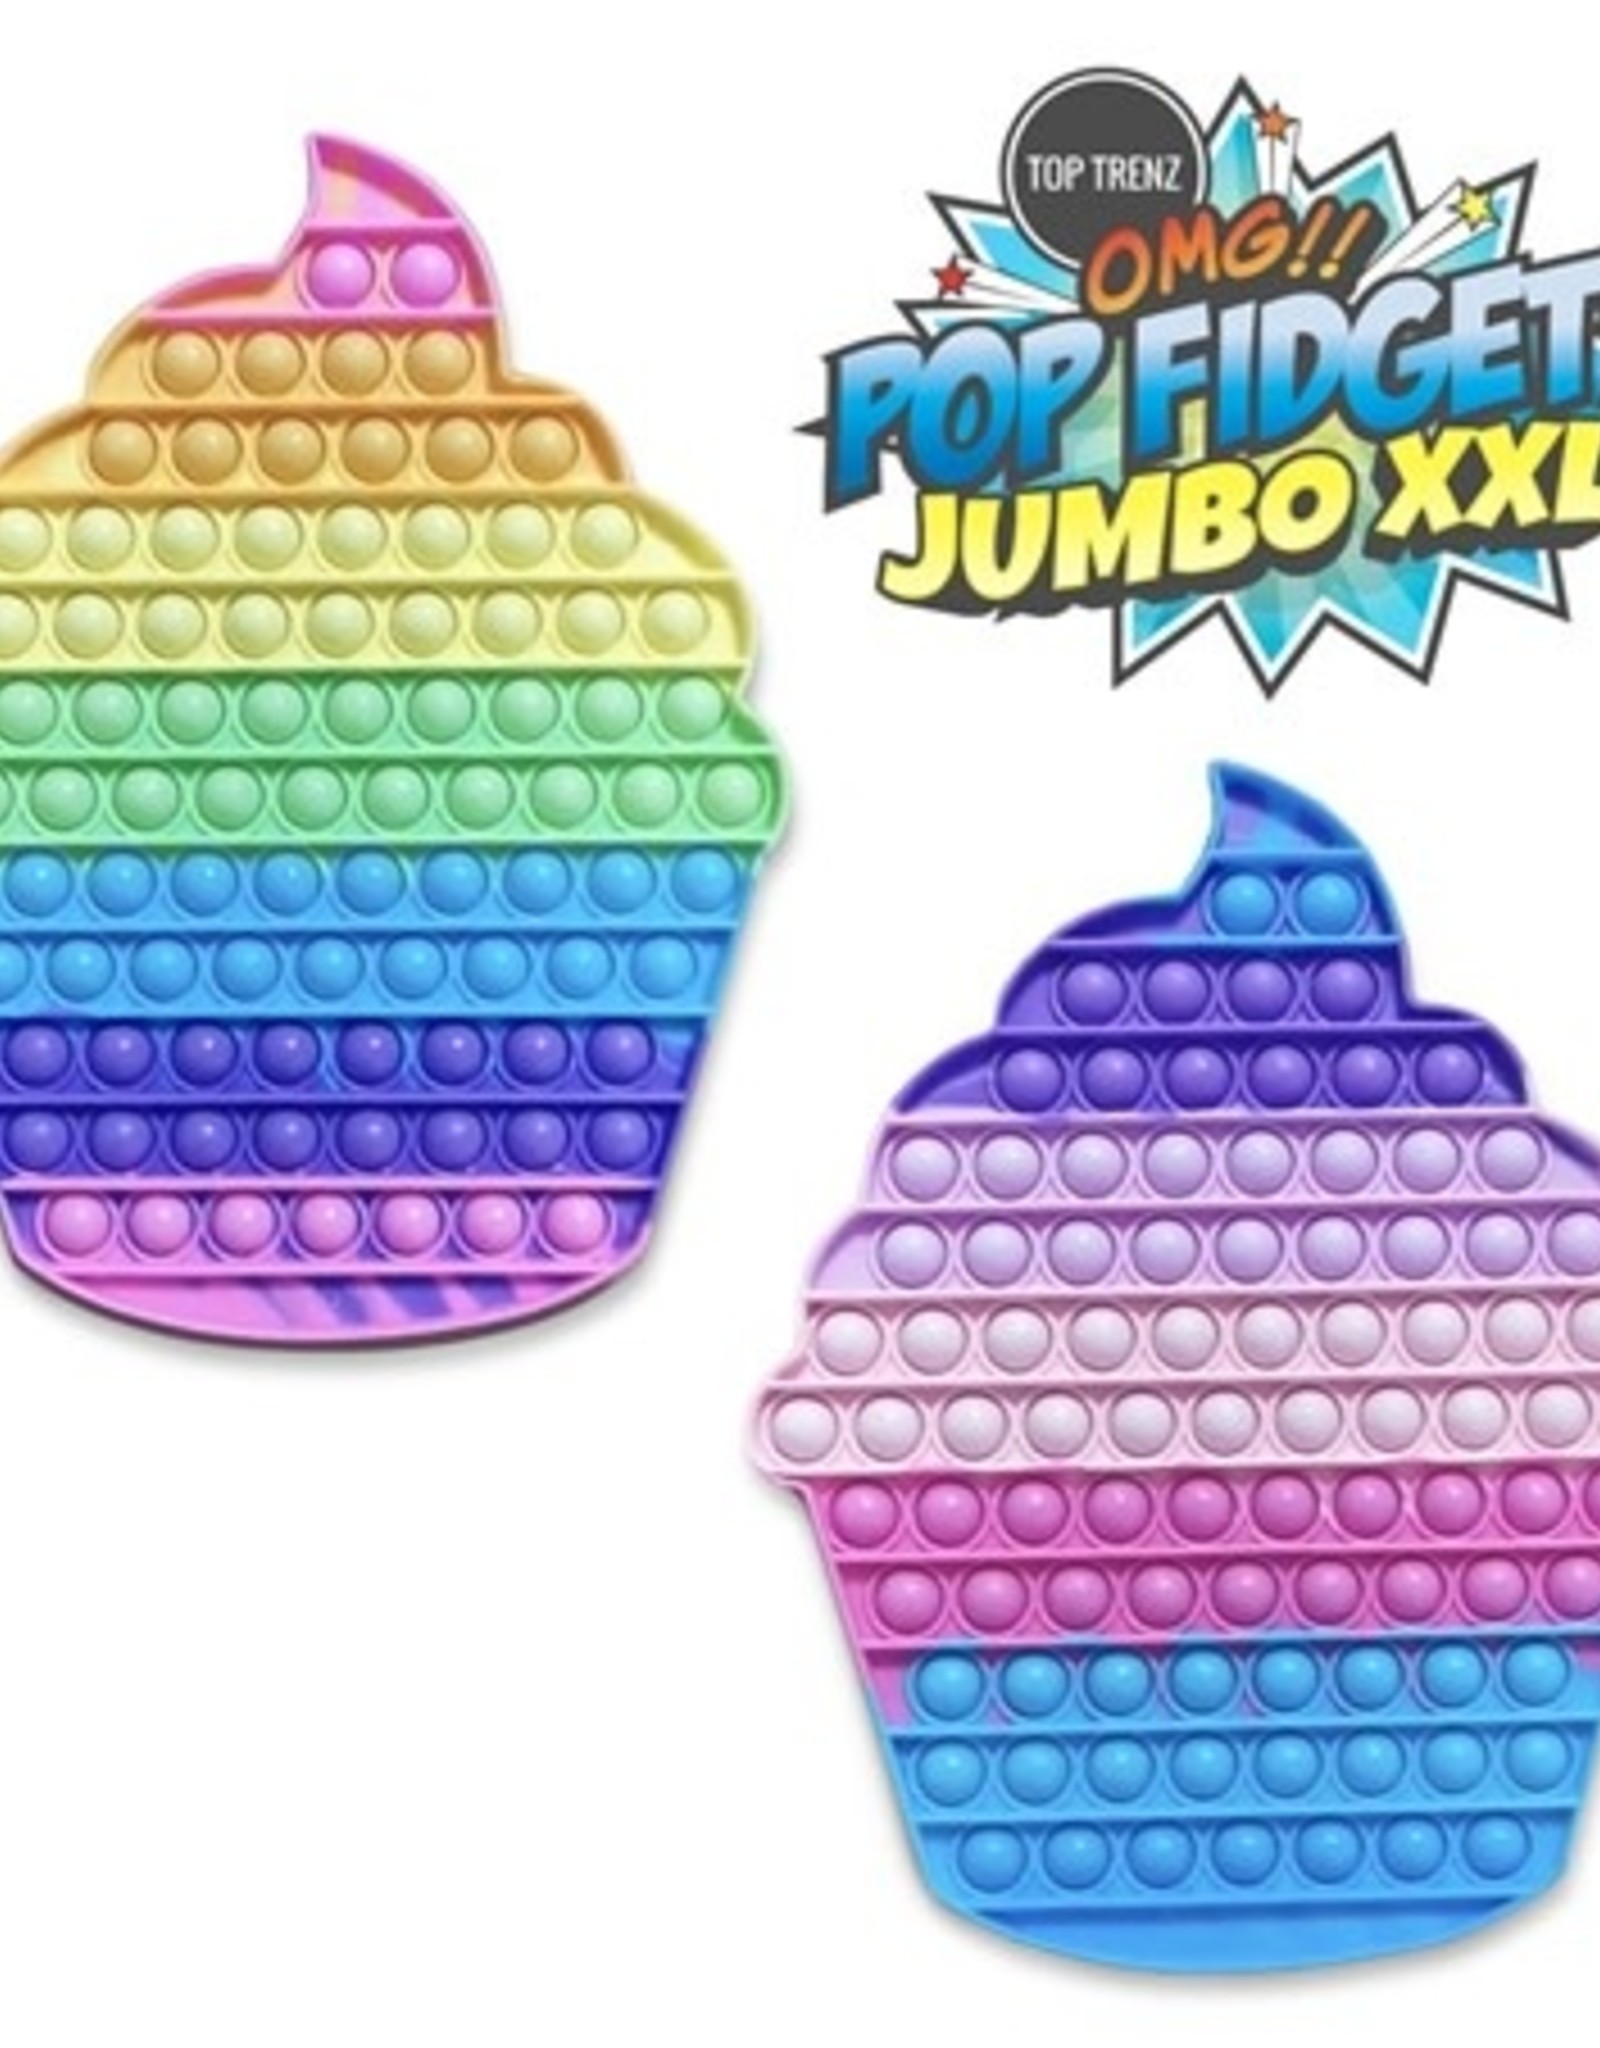 Jumbo XXL Cupcake Pop Fidget